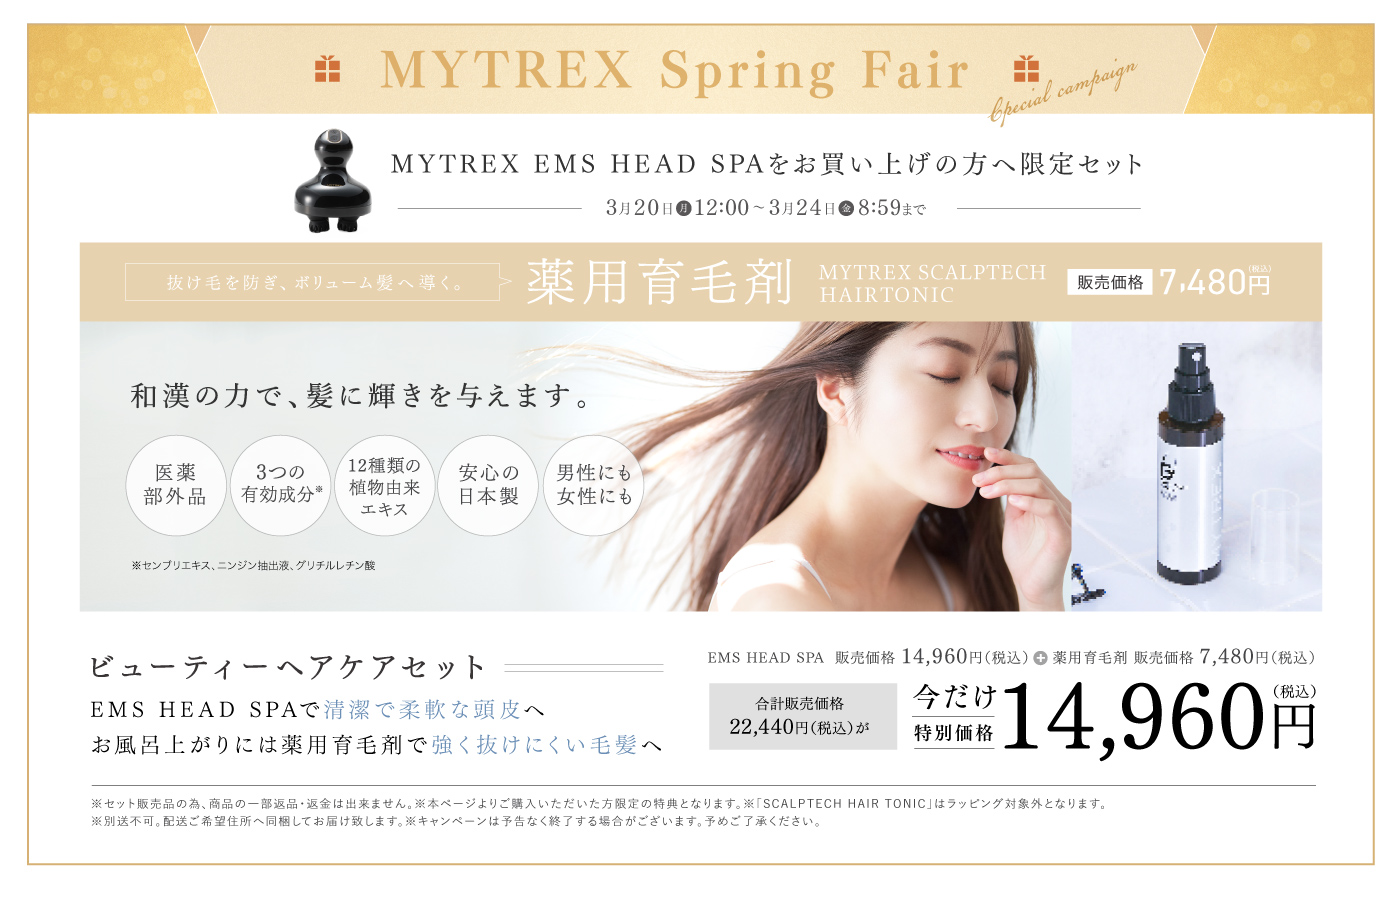 MYTREX SCALPTECH HAIR TONIC 薬用育毛剤